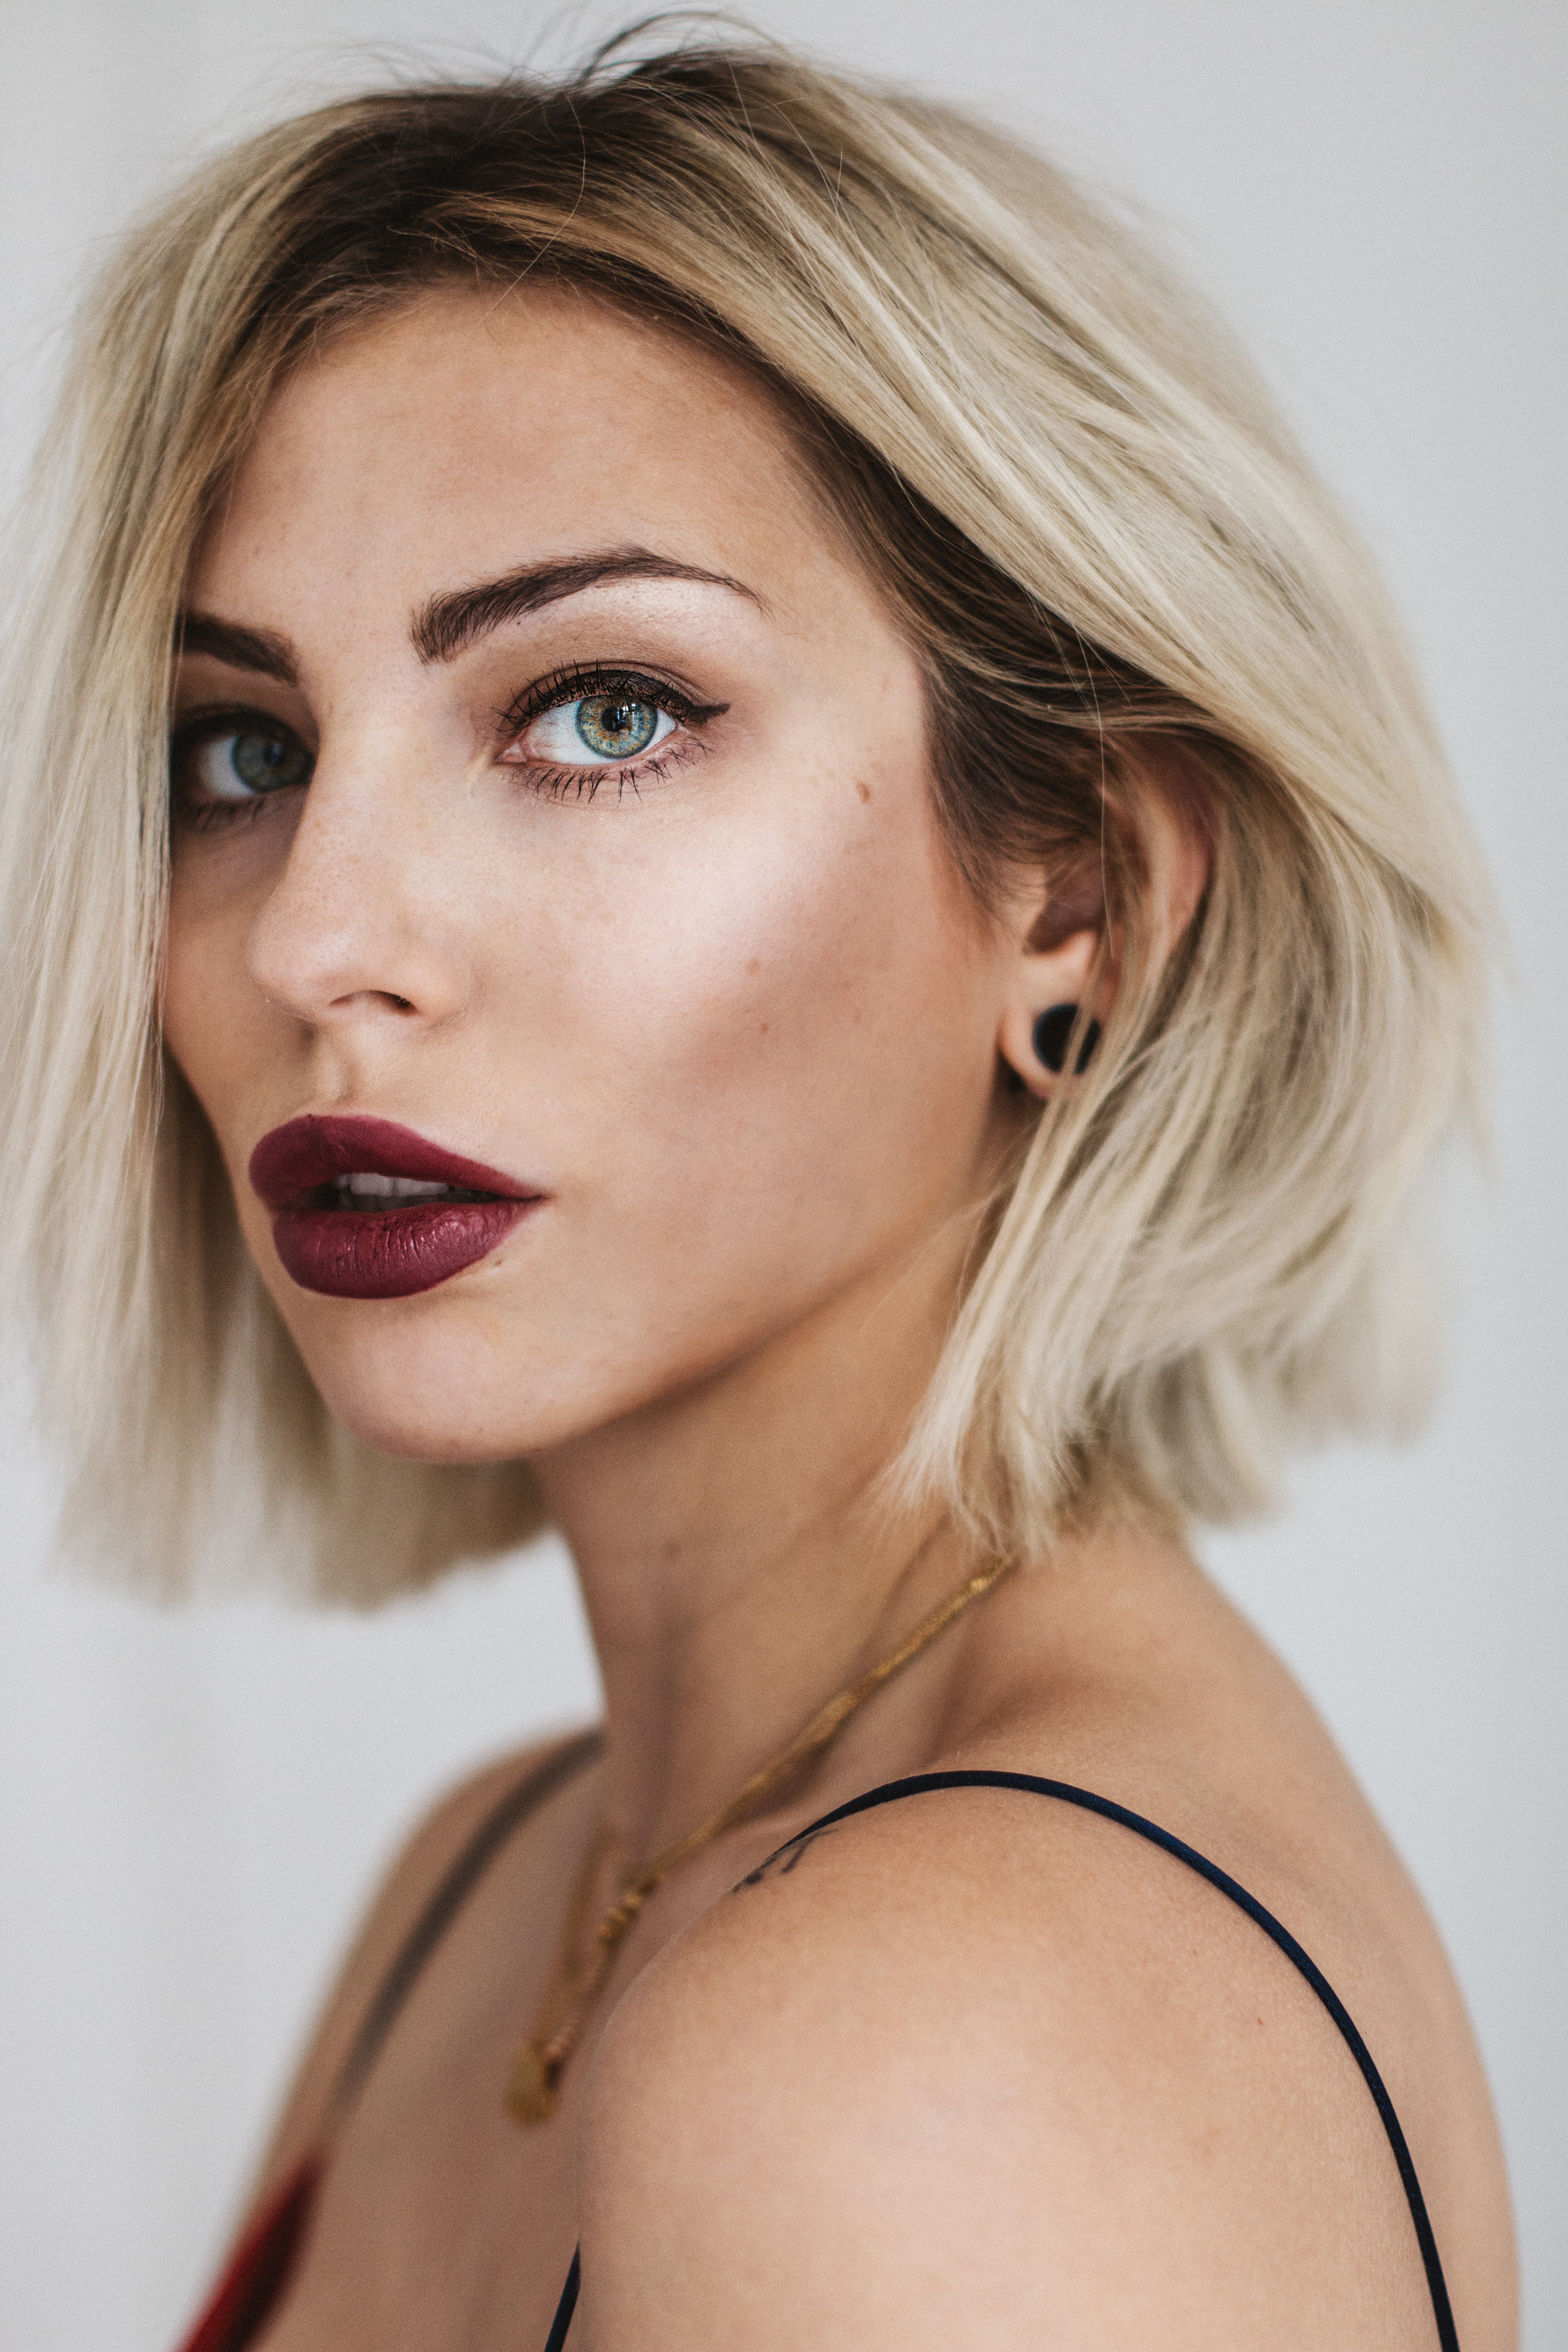 Masha Sedgwick - the signature look | find more details on my blog | platin blonde blunt bob hair style | Balayage | dark lips & eyliner | editorial